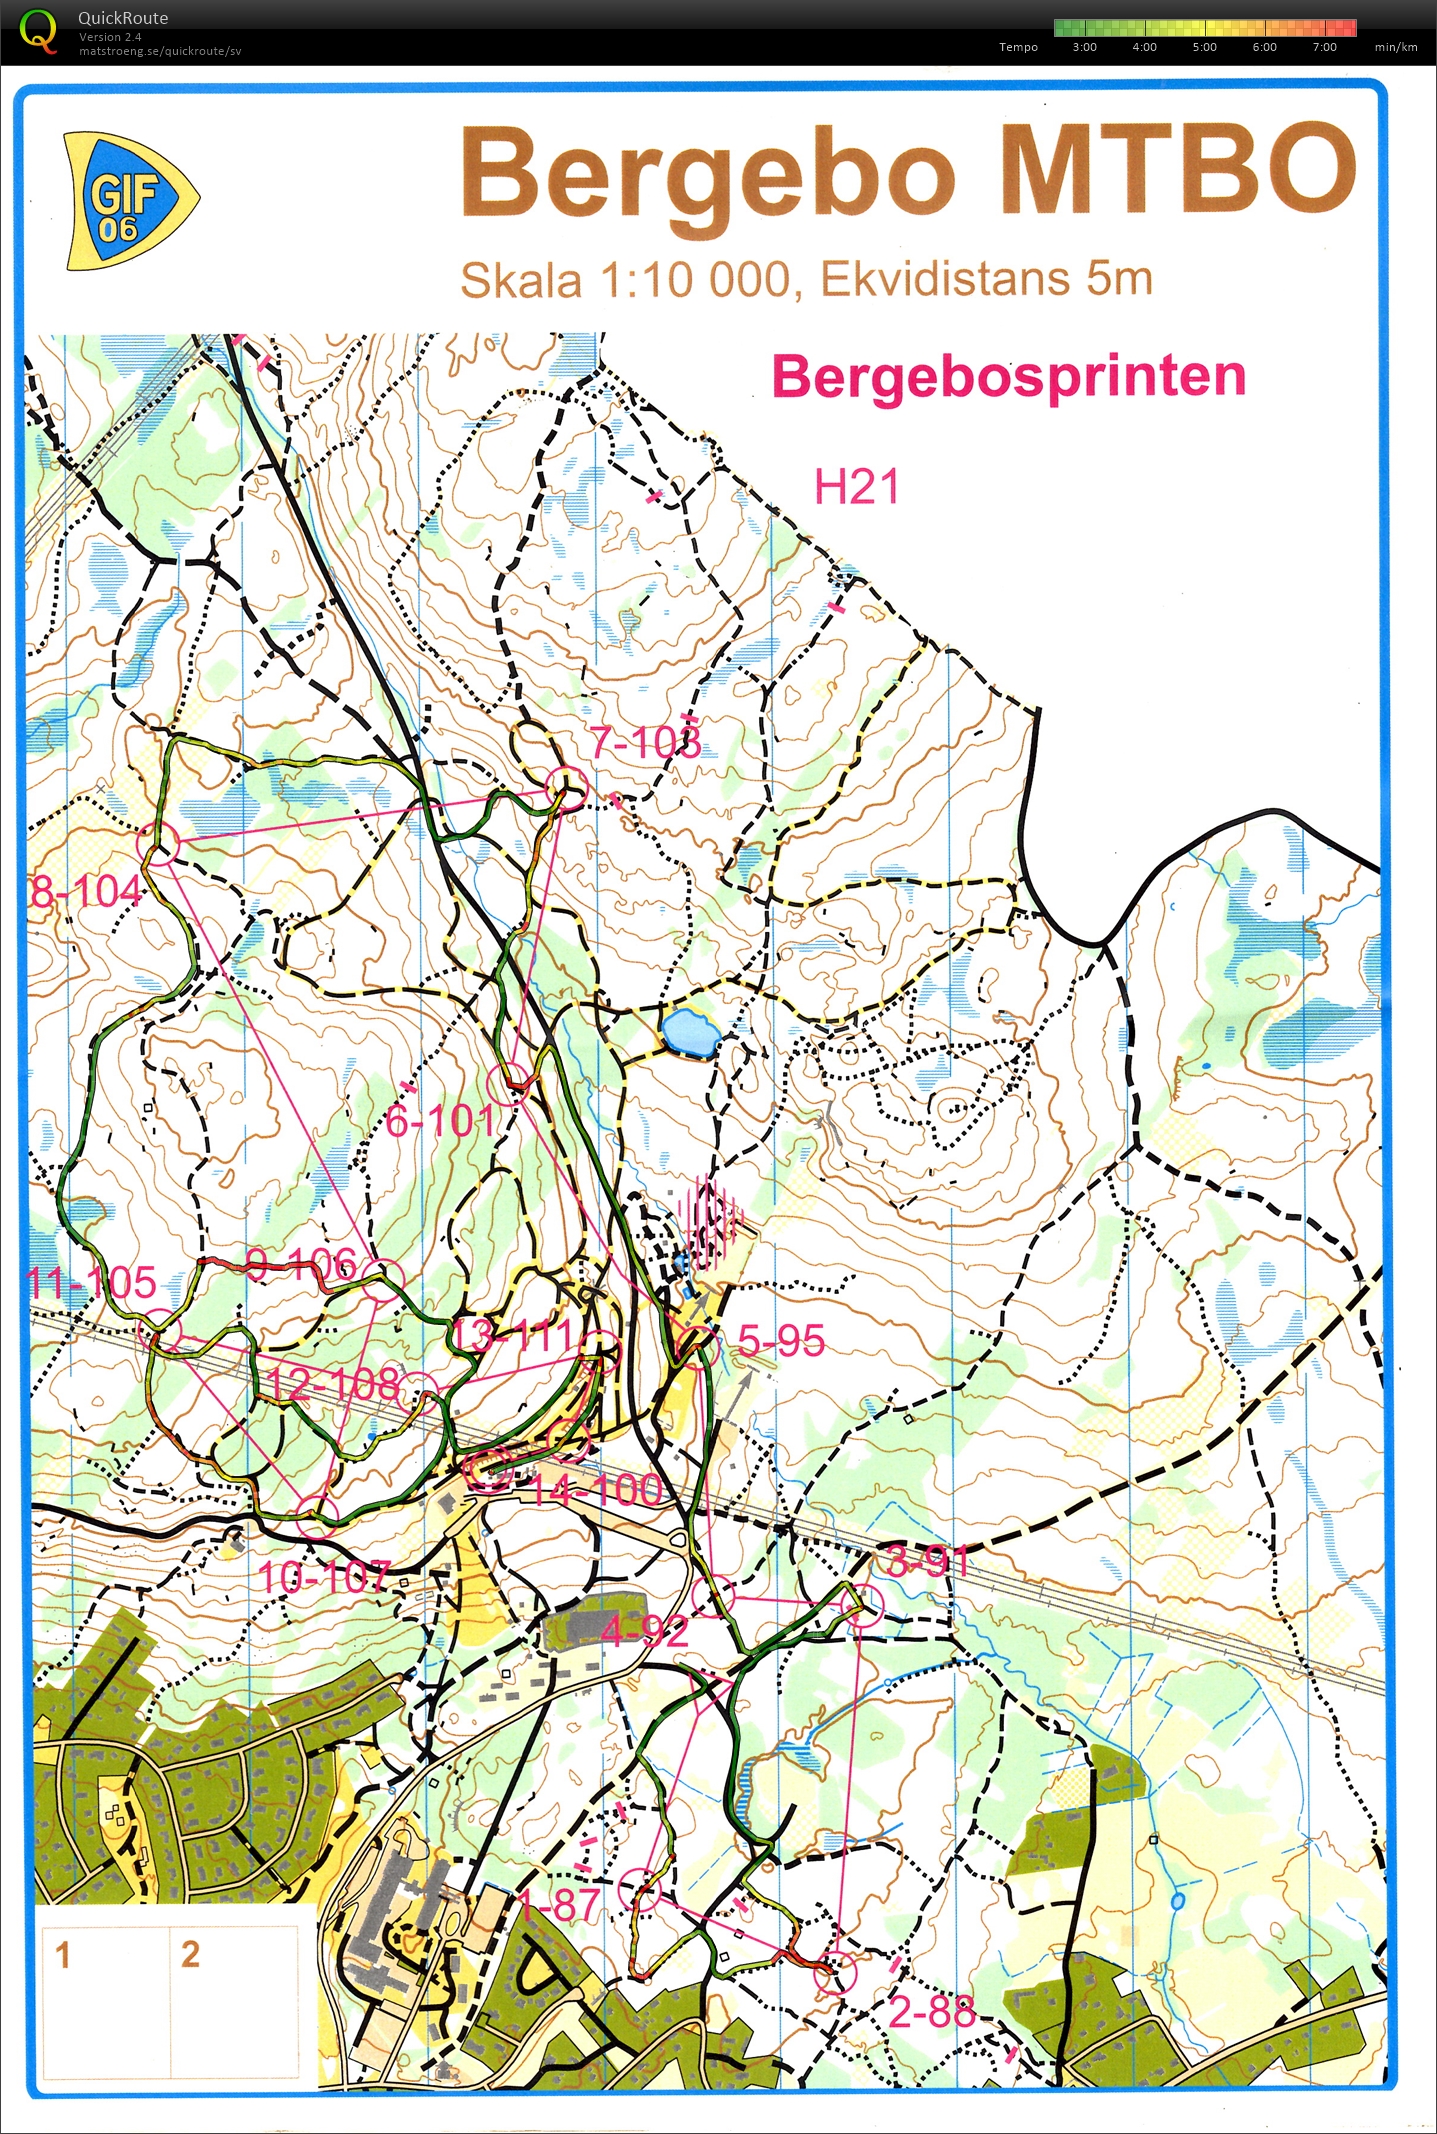 Bergebosprinten (17/05/2017)